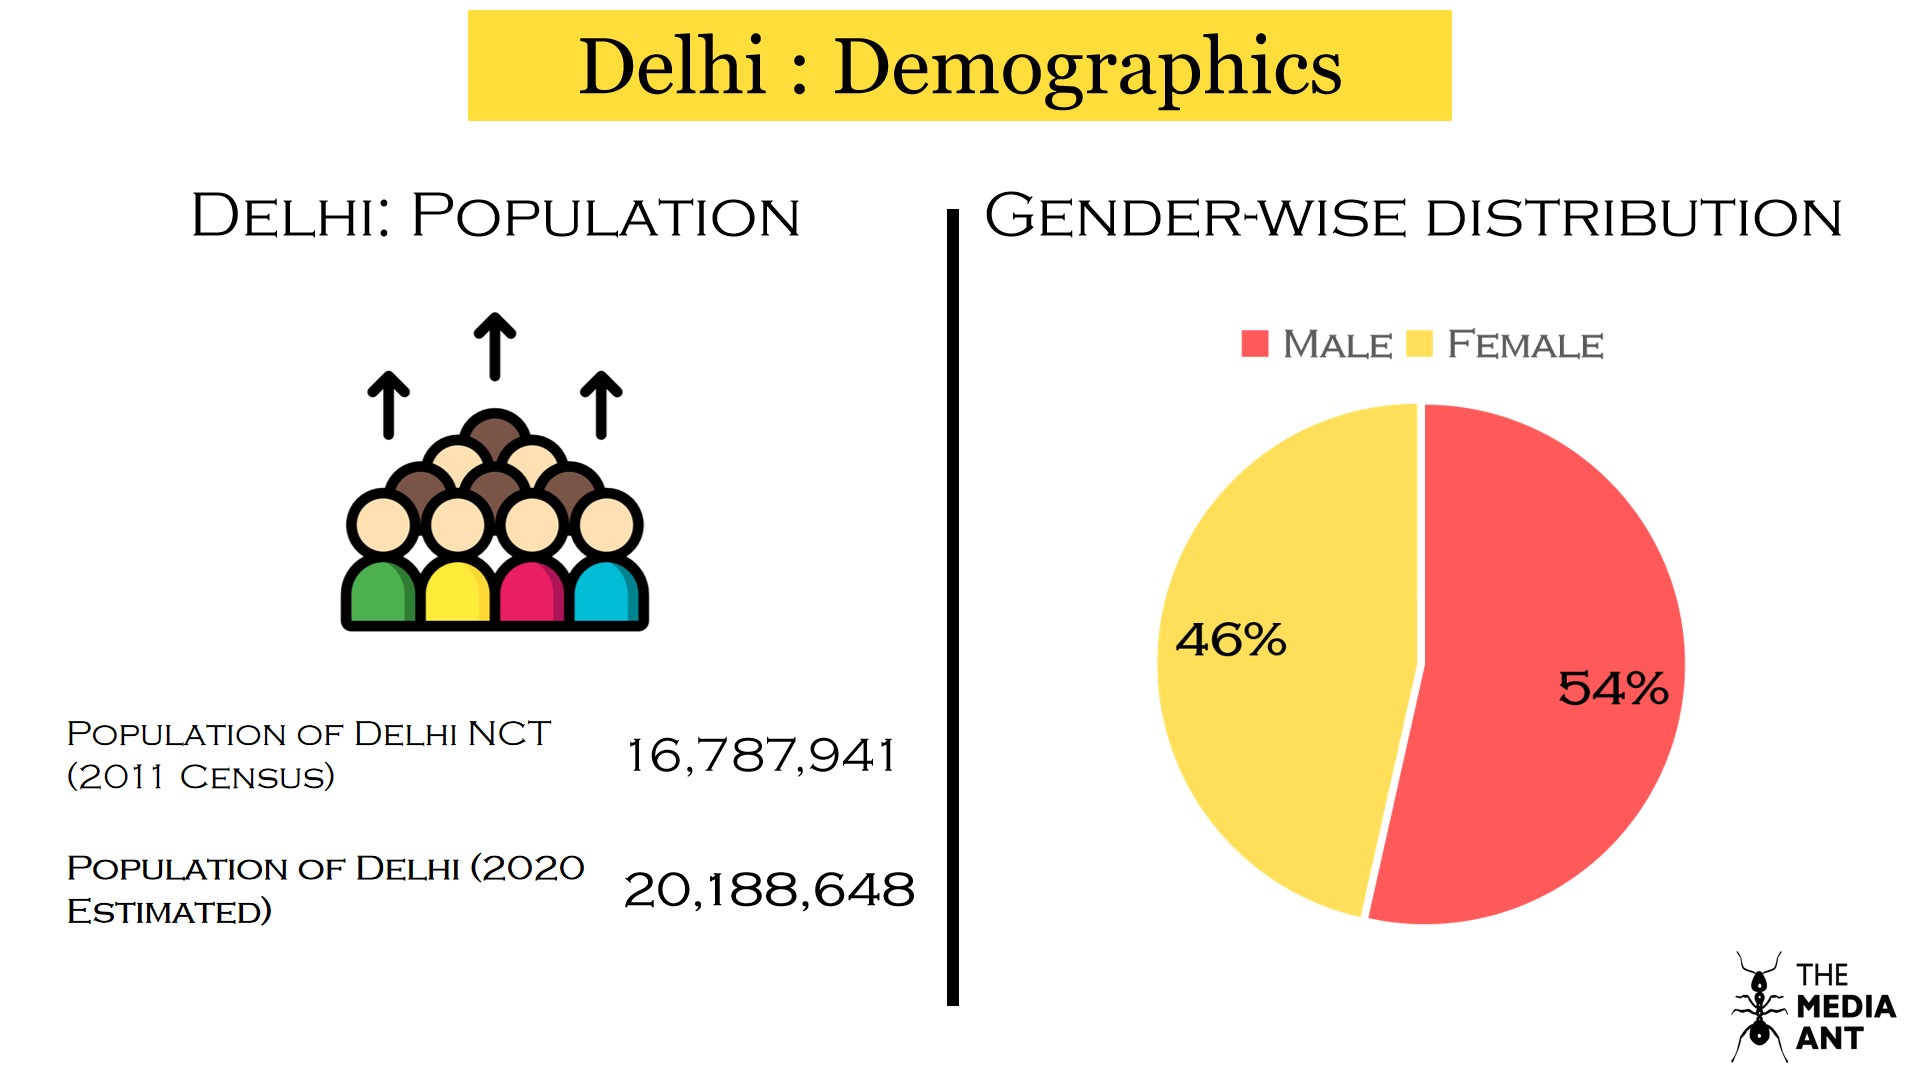 Delhi population and gender-wise distribution of population